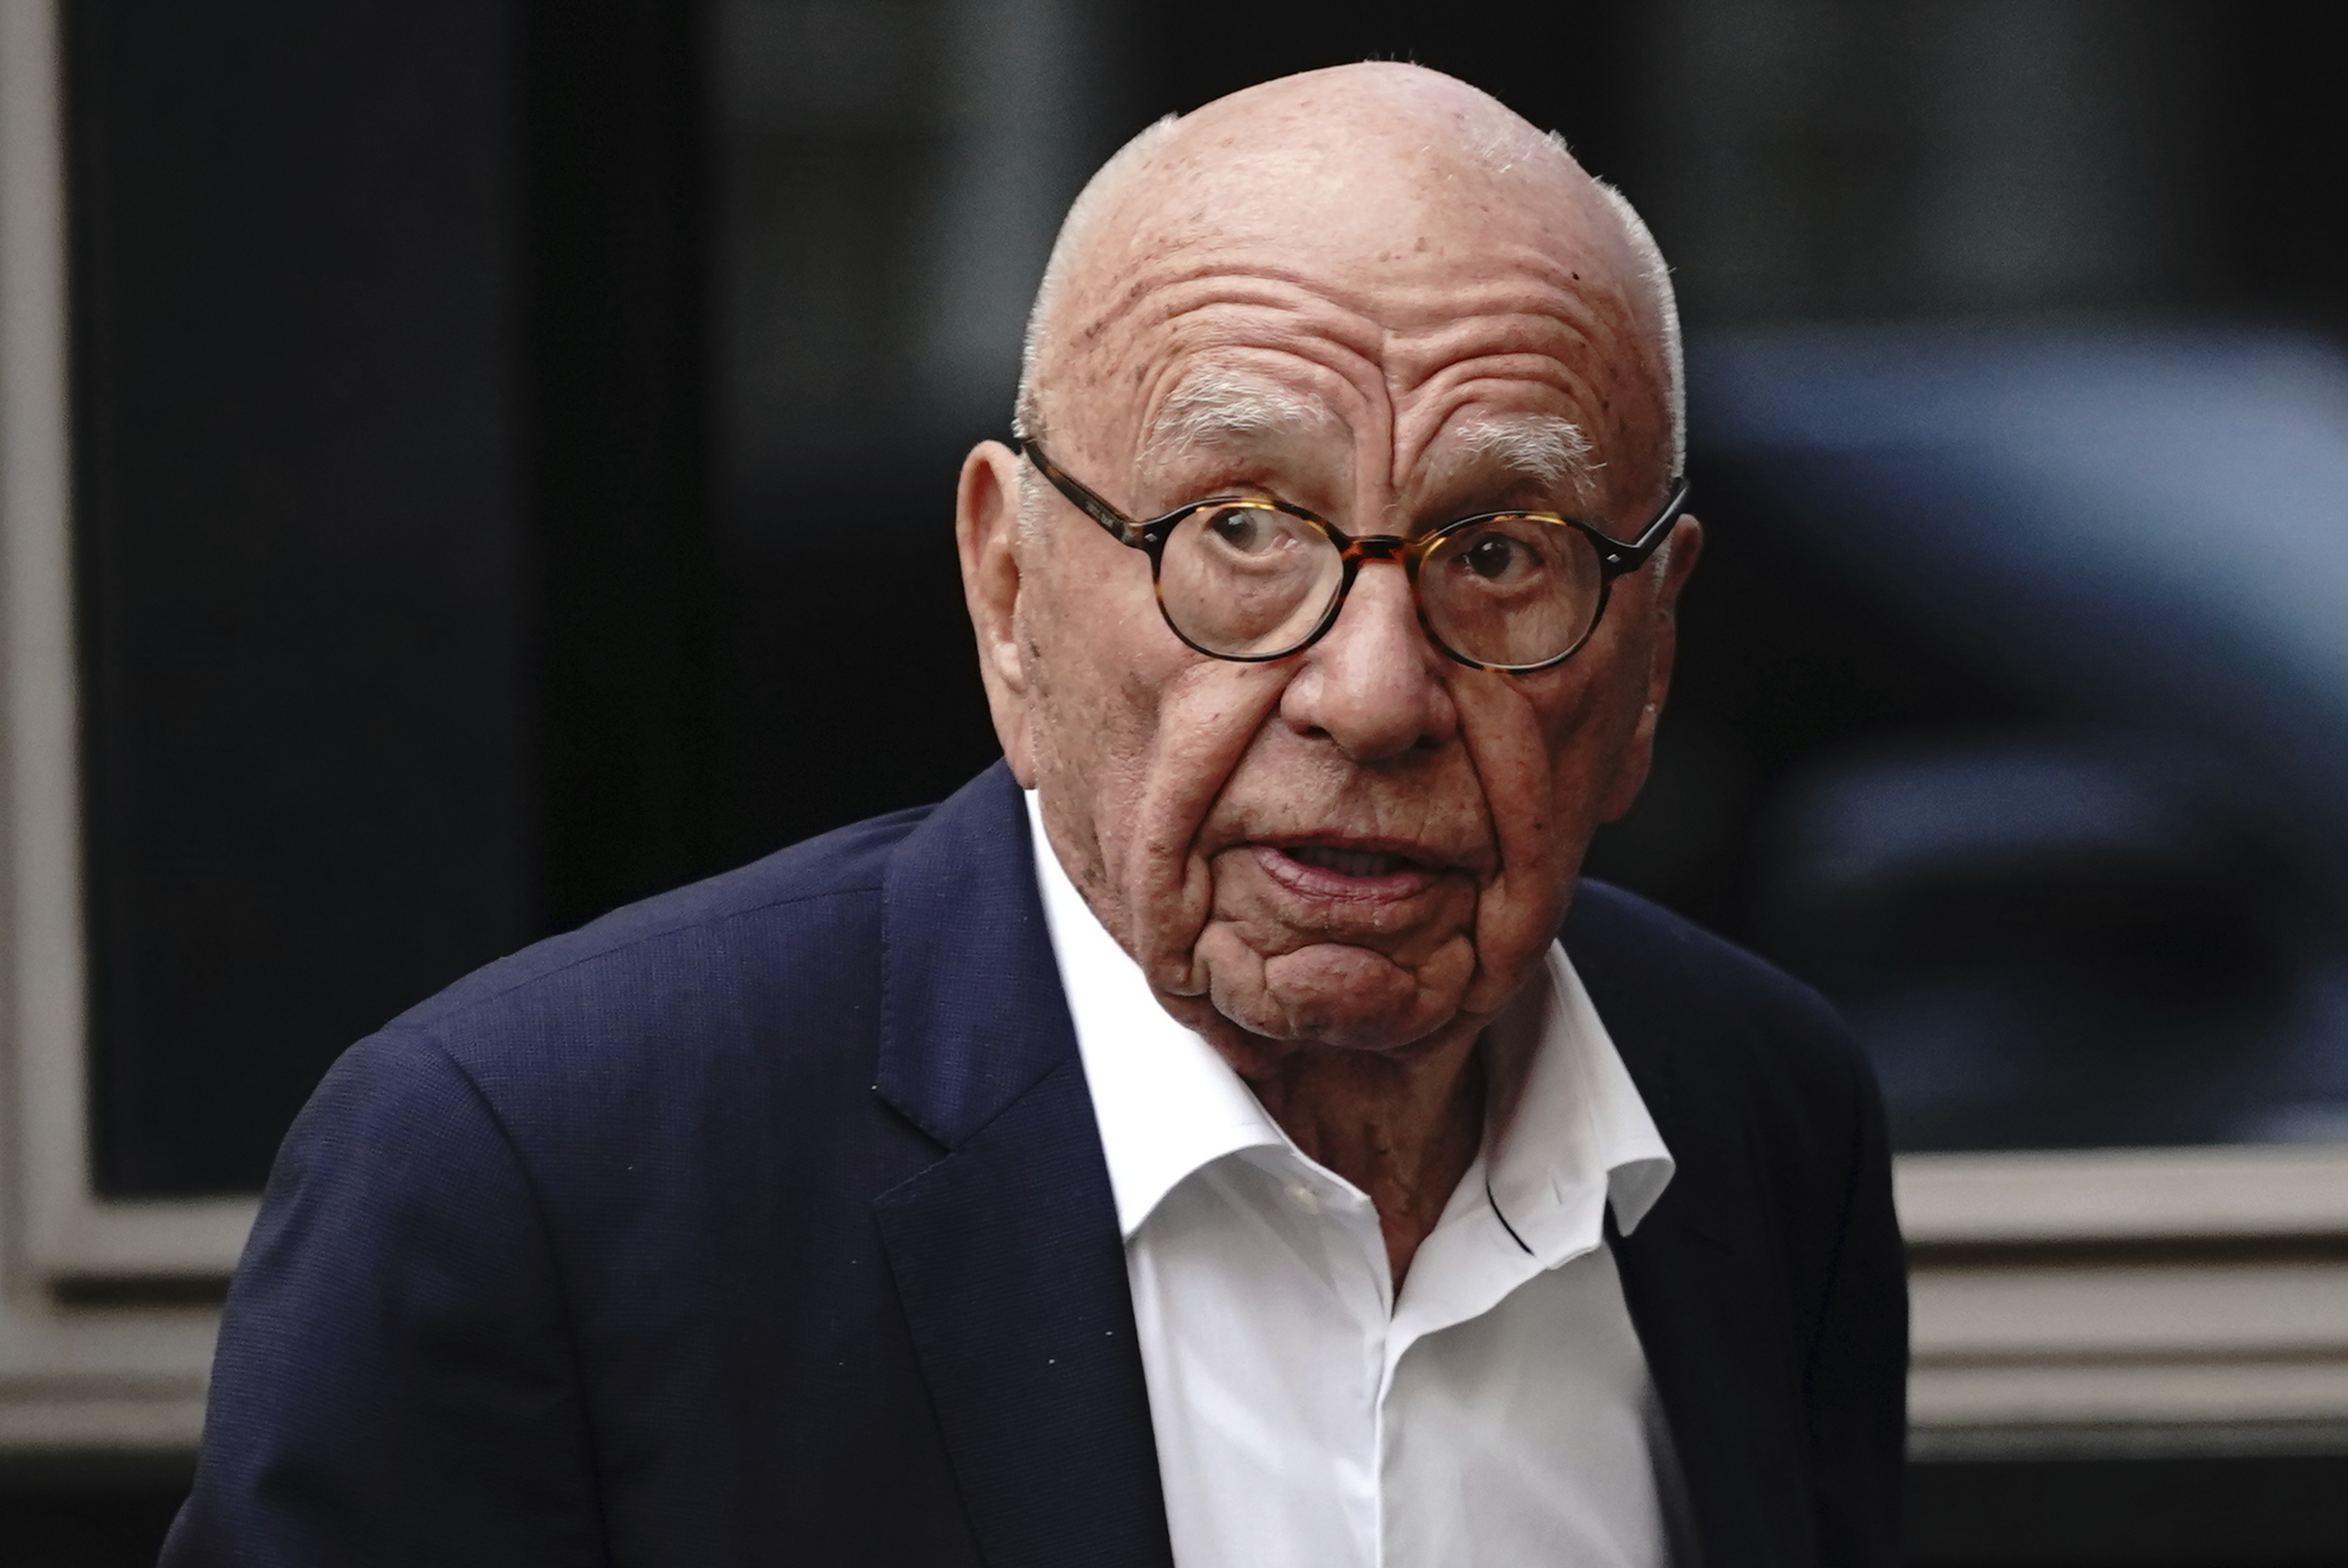 Rupert Murdoch Deposed in $2.7 Billion Defamation Case Against Fox Corp: Report